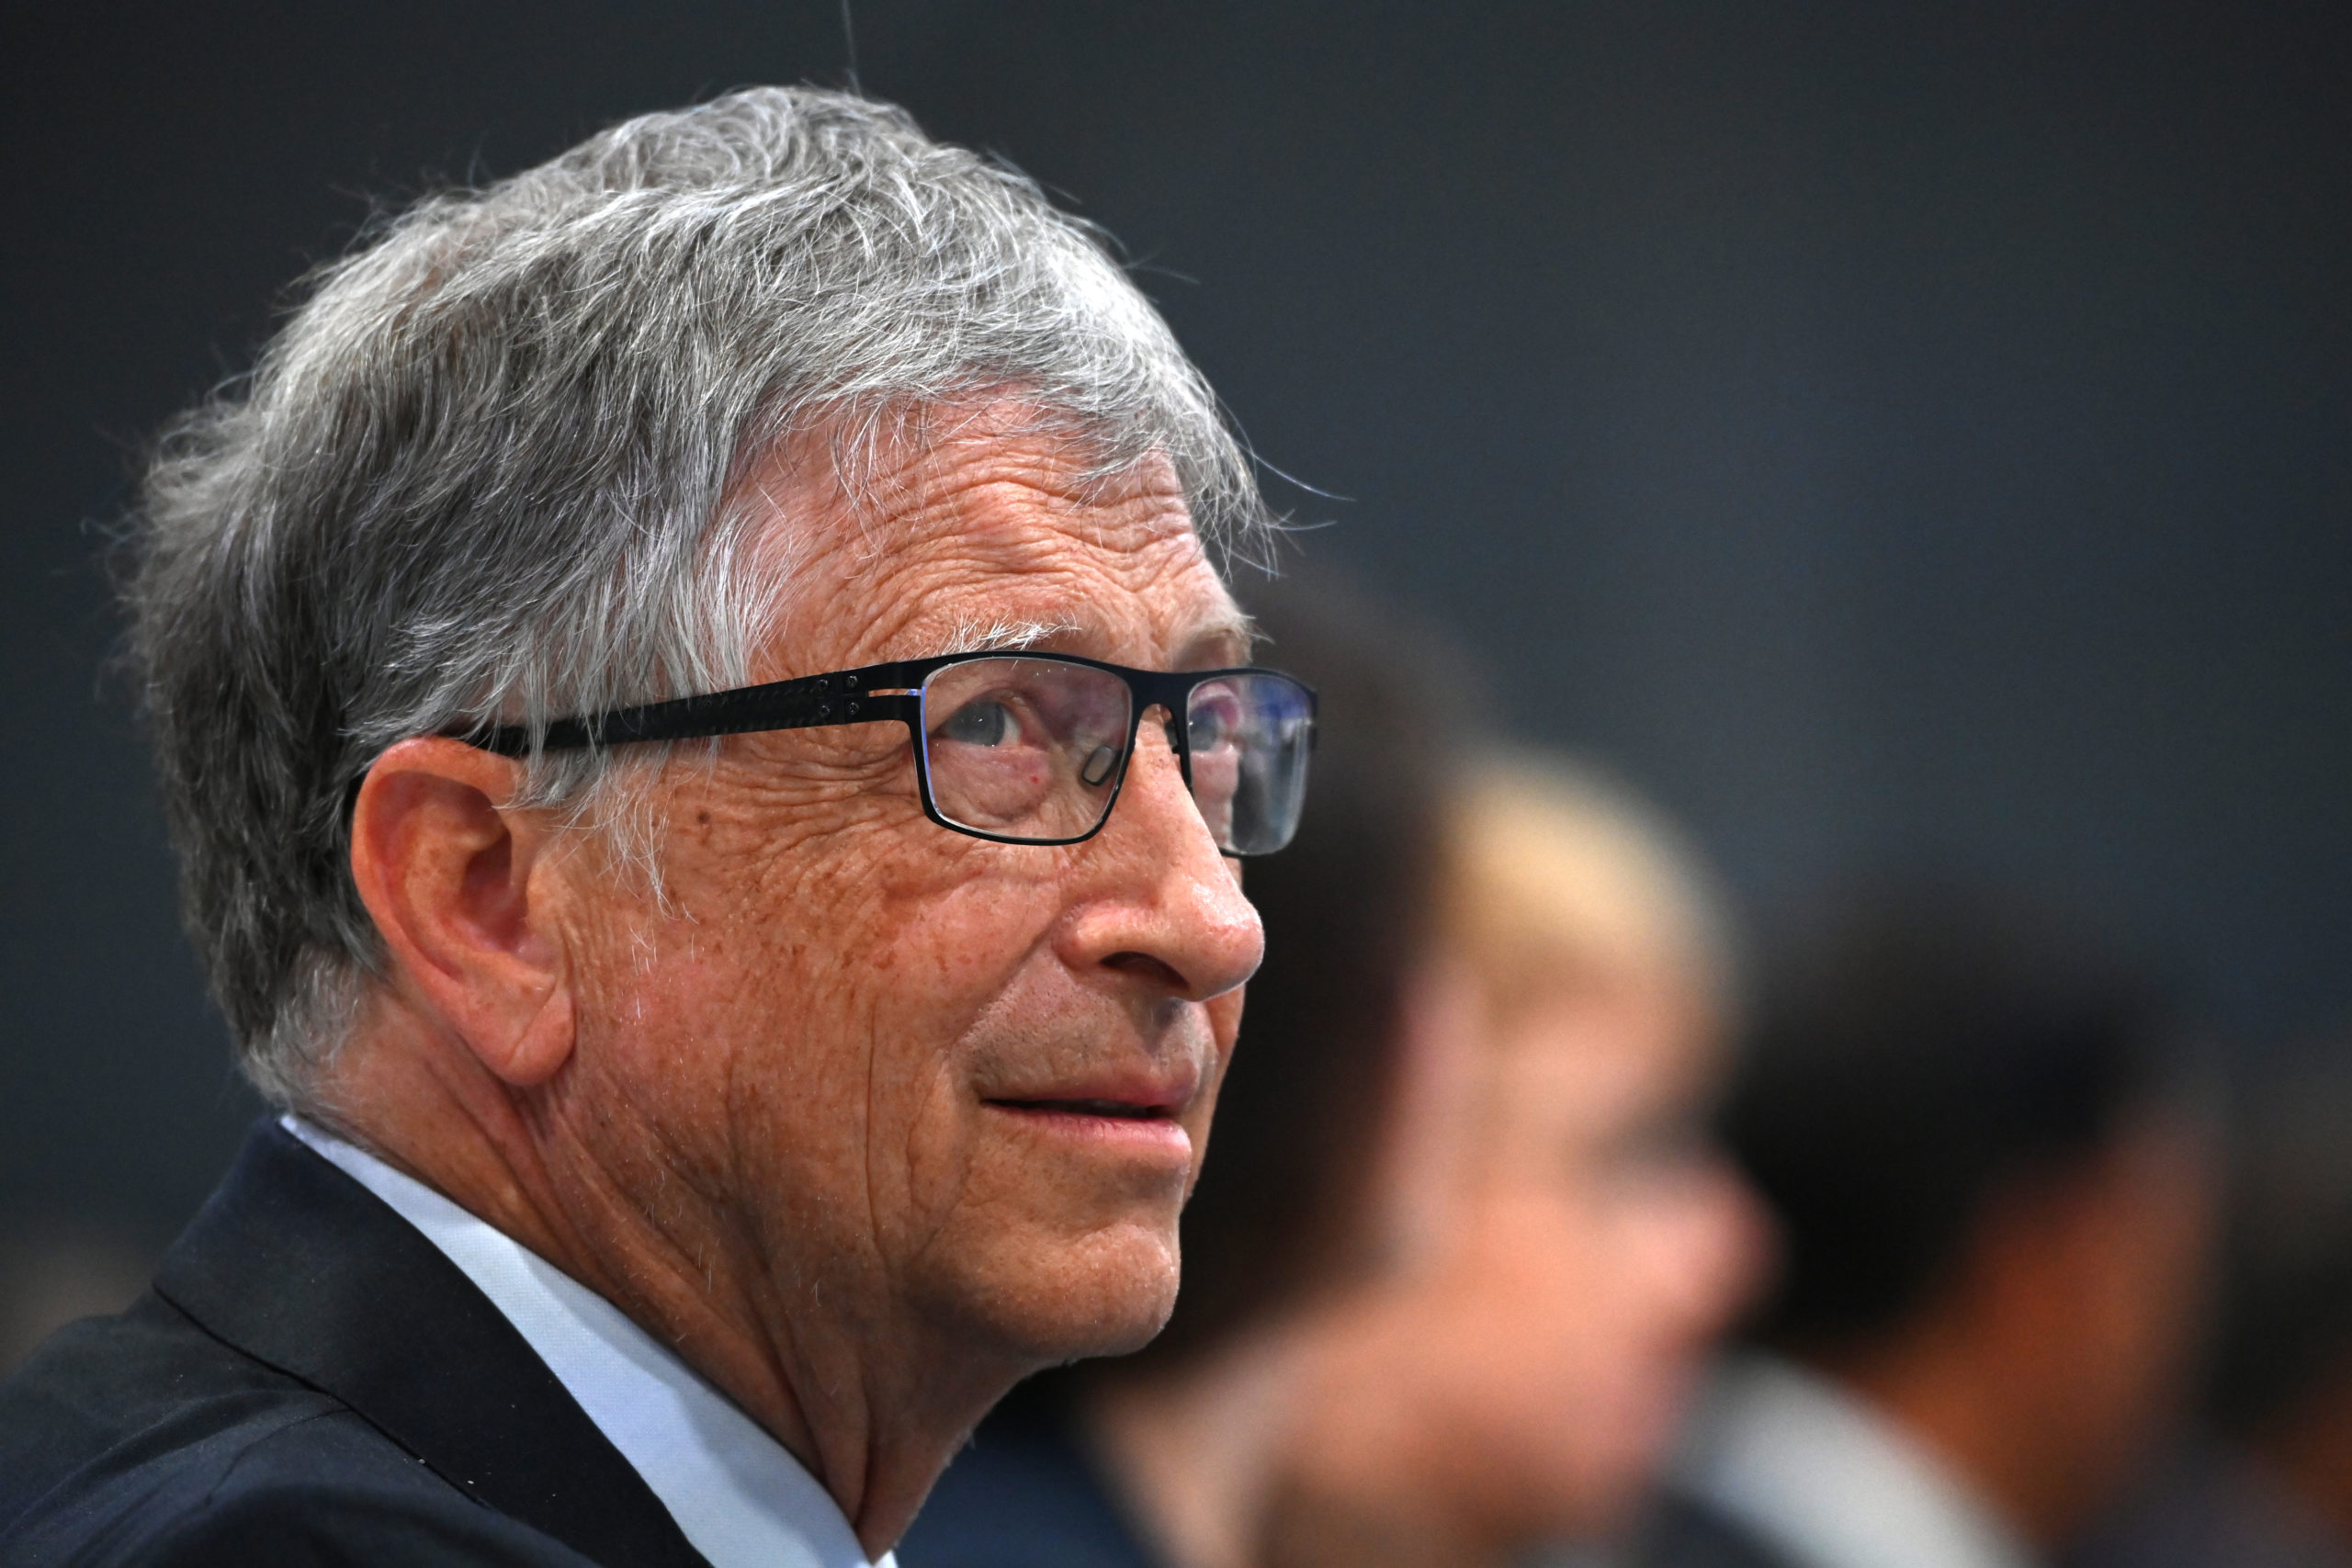 Bill Gates says reversing Roe v. Wade “would set us back 50 years”